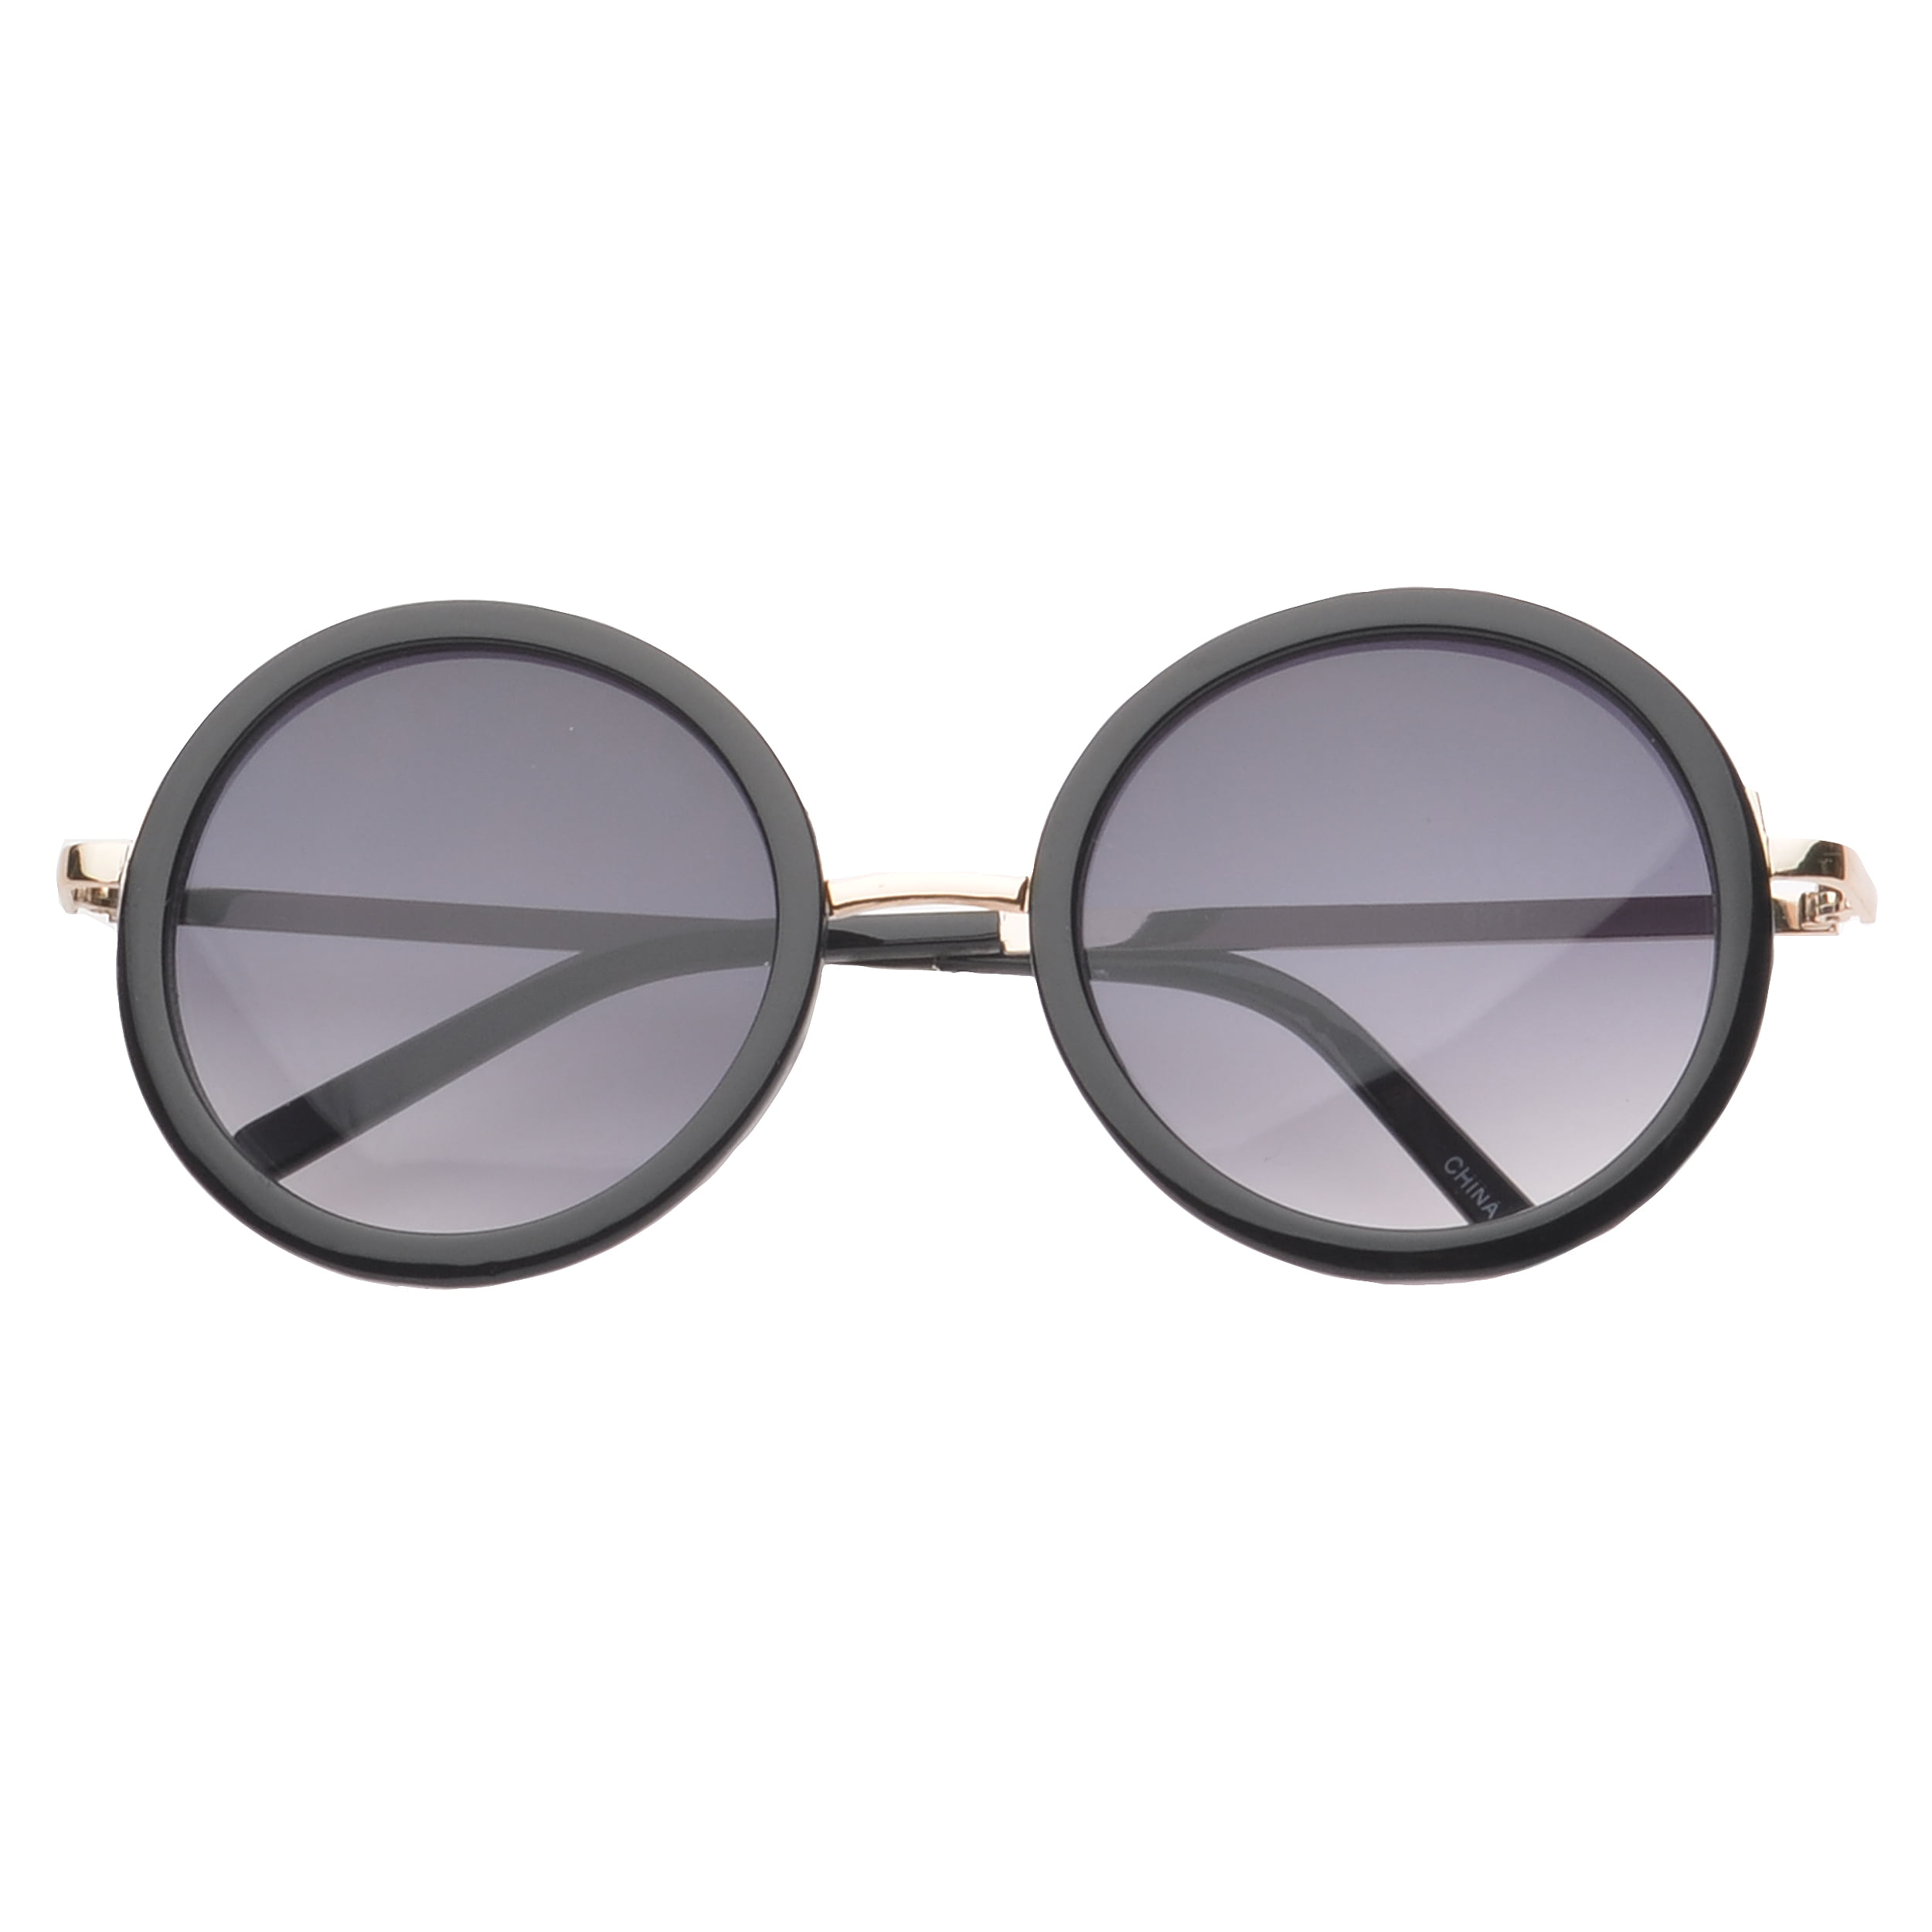 MLC Eyewear Binoculars Round Fashion Sunglasses in Black-gold - Walmart.com